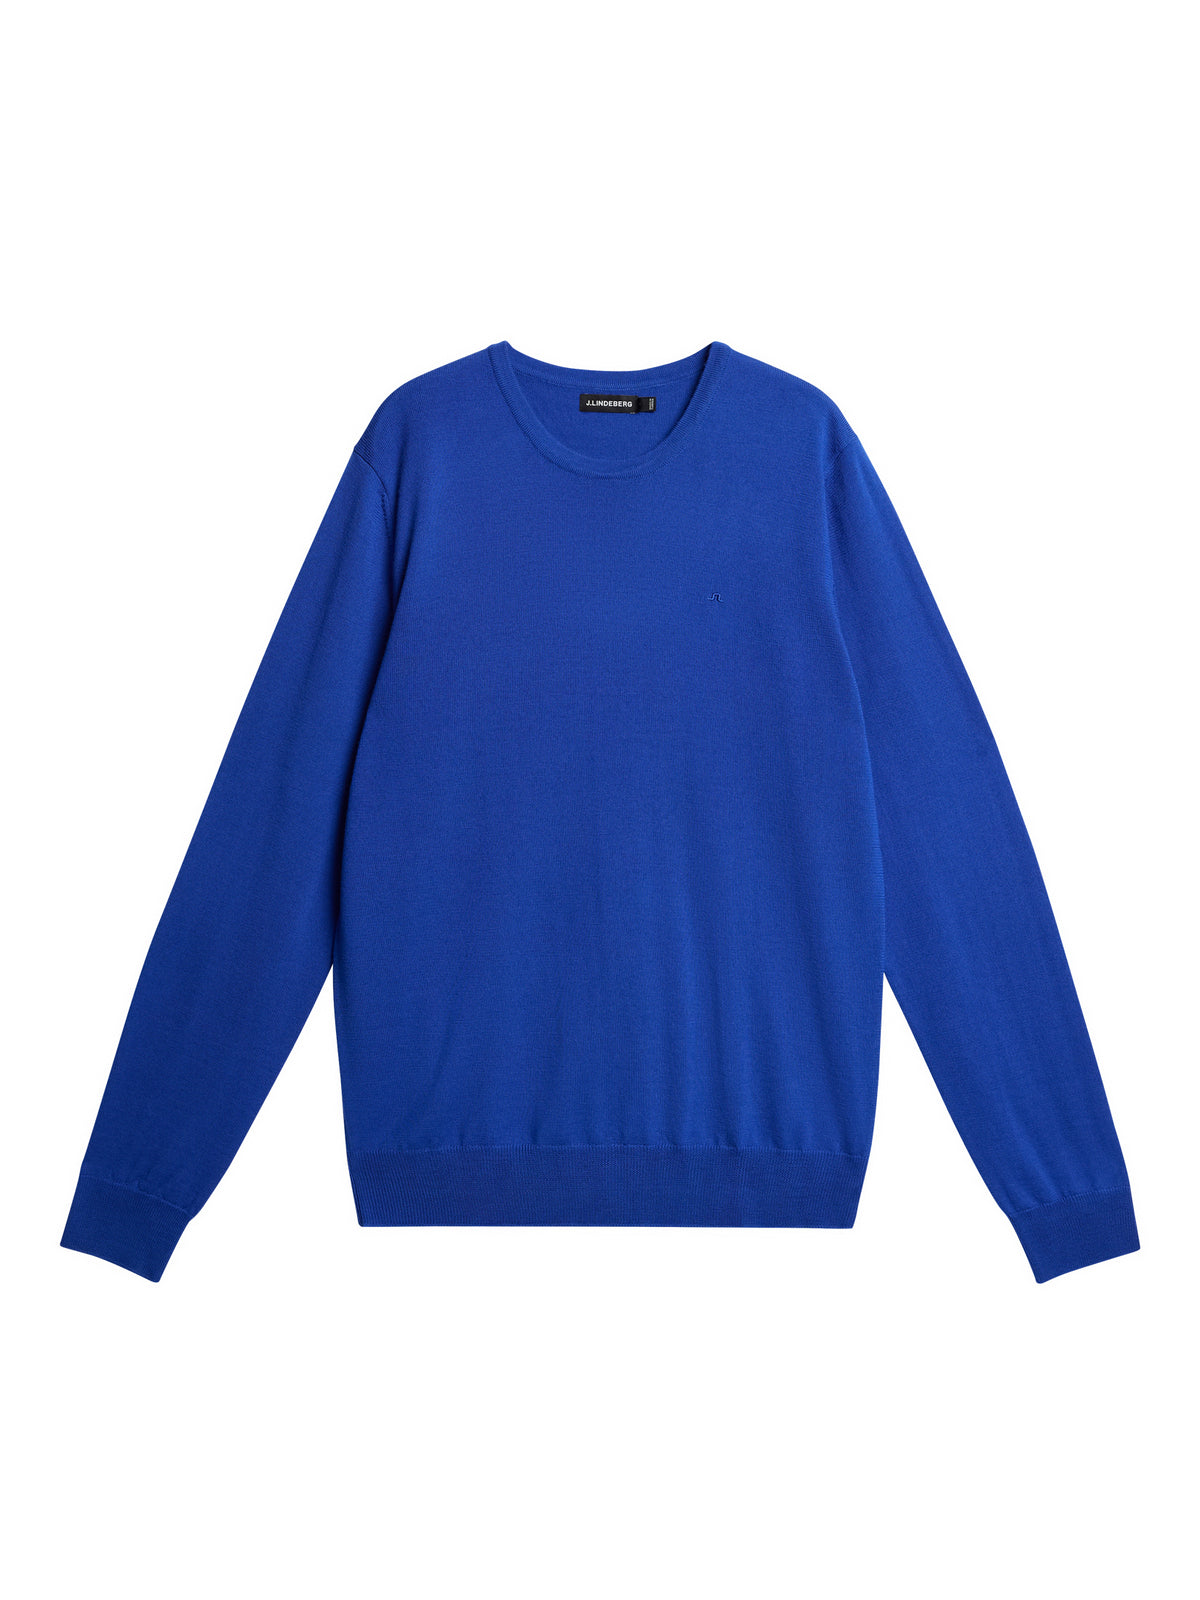 johnnie-O Boggs Merino Wool Crewneck Sweater in Twilight - Size: XL